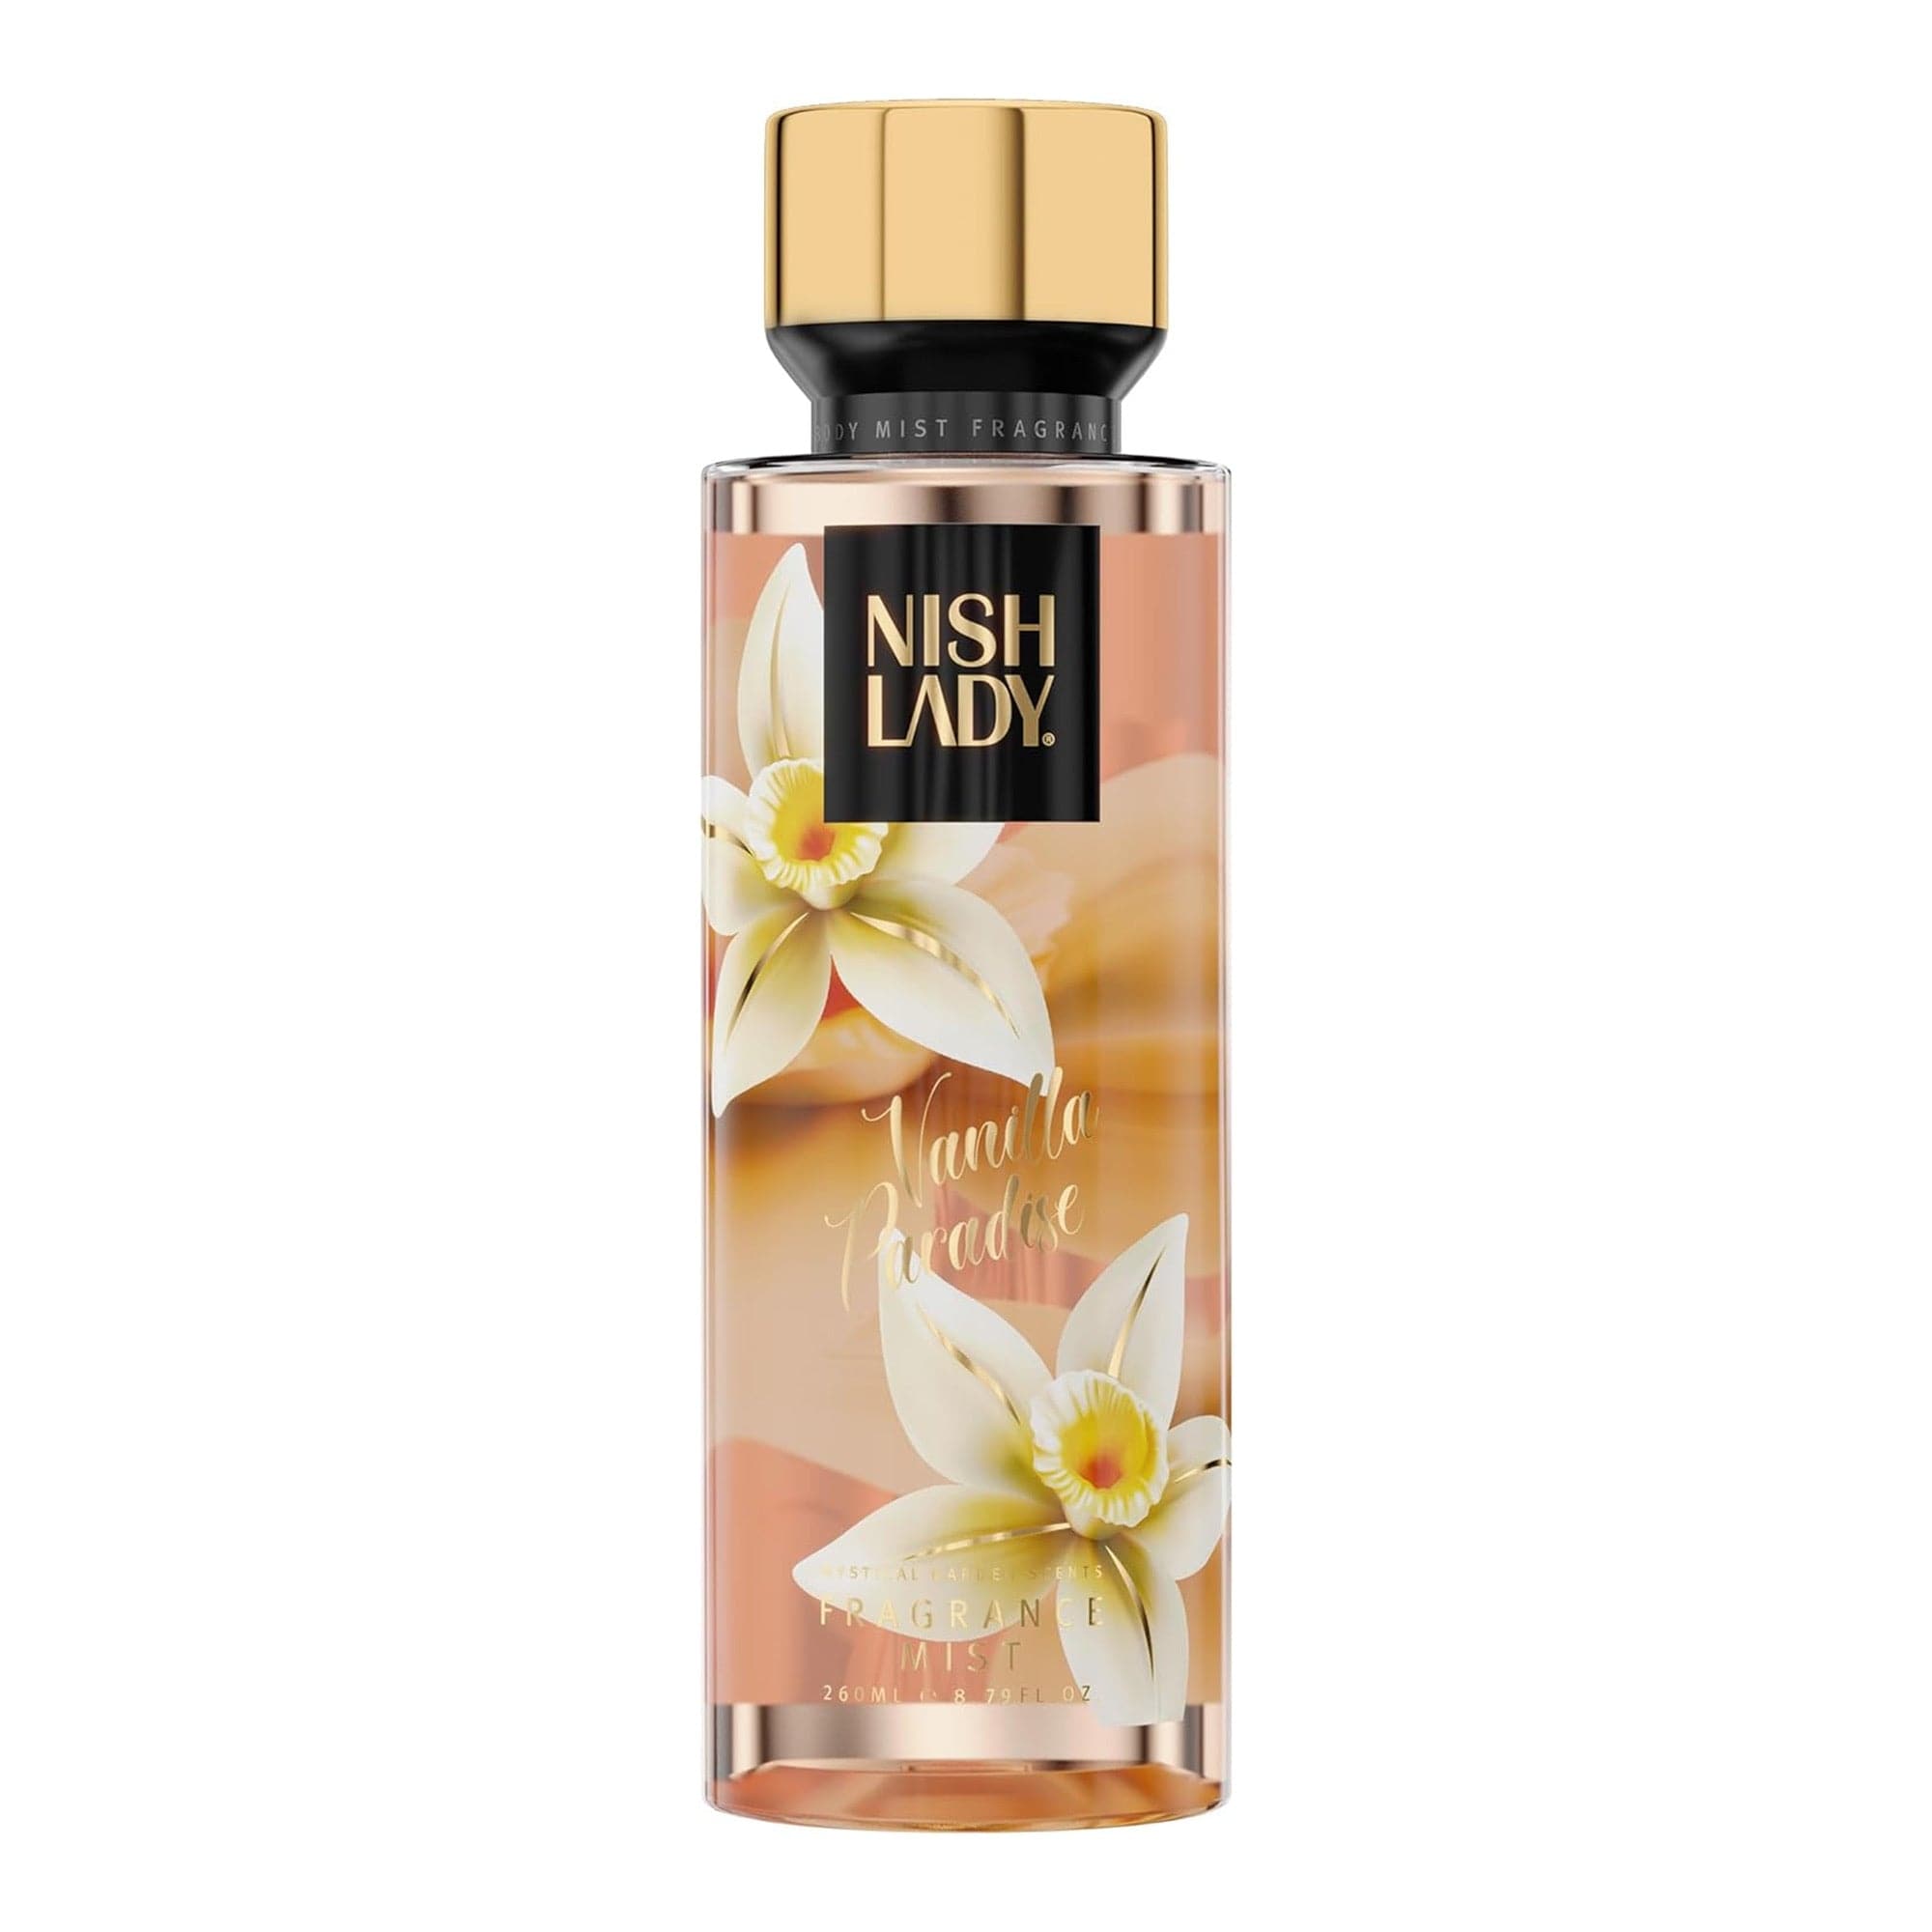 Nishlady - Fragrance Mist Vanilla Paradise 260ml